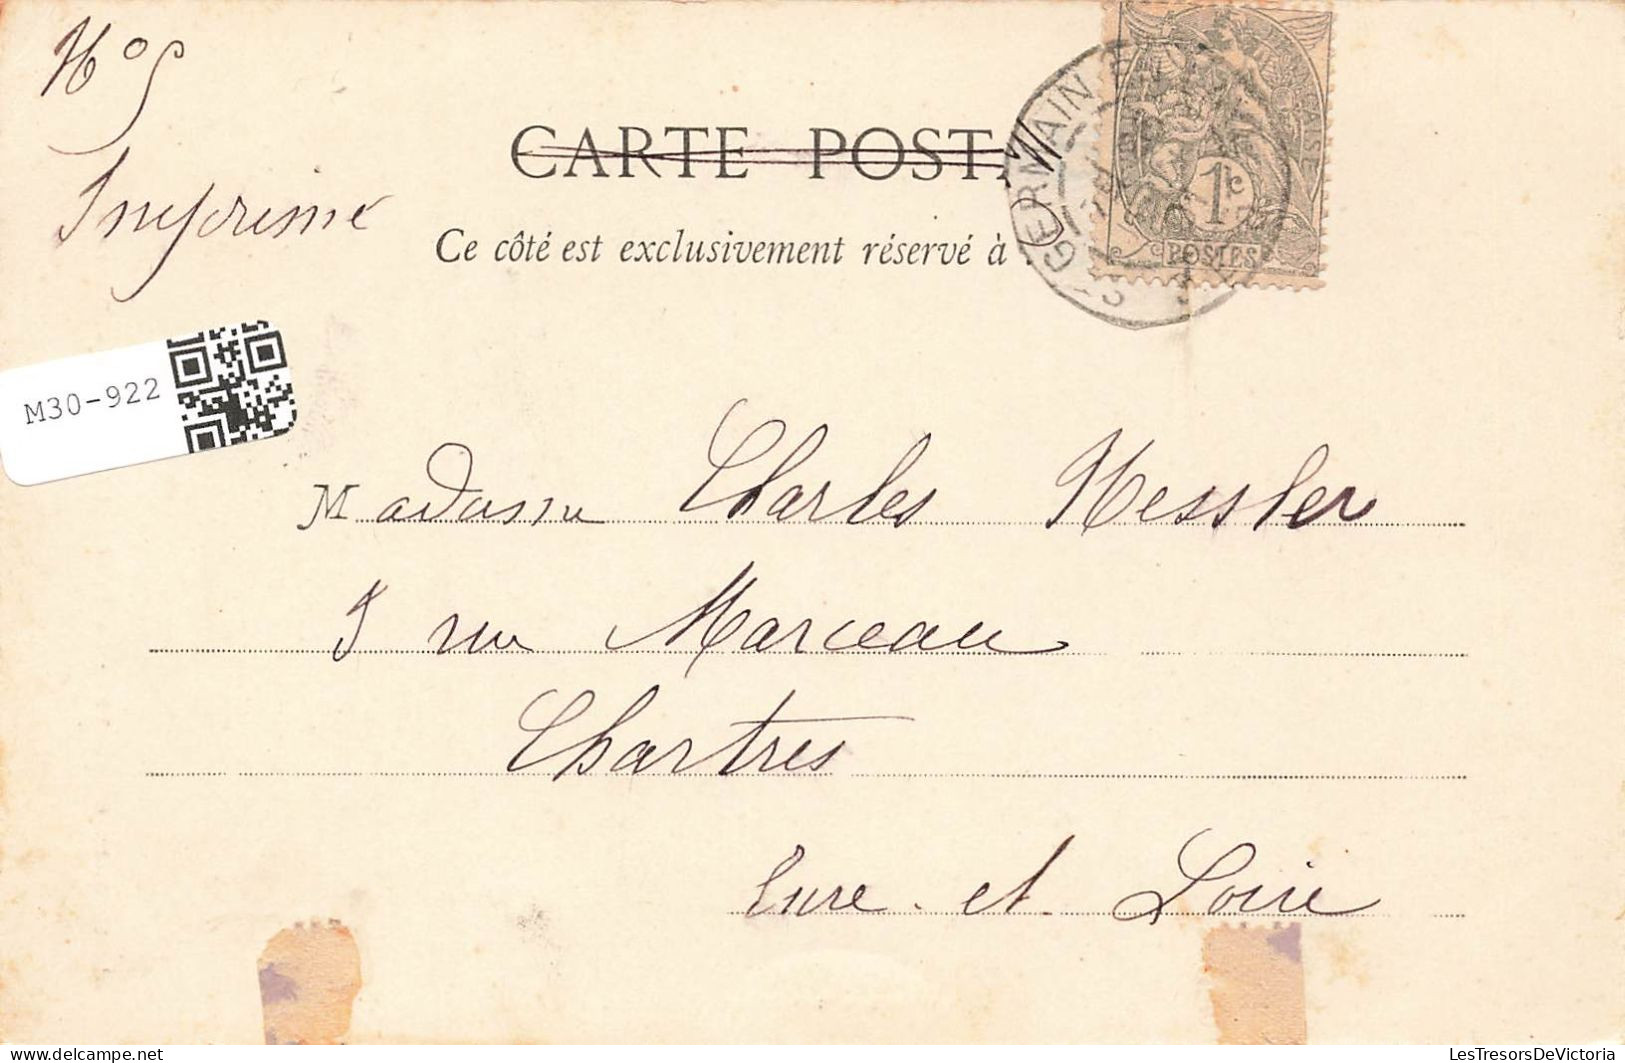 FRANCE - Saint Germain En Laye - La Forêt - Mare à La Douzaine - Carte Postale Ancienne - St. Germain En Laye